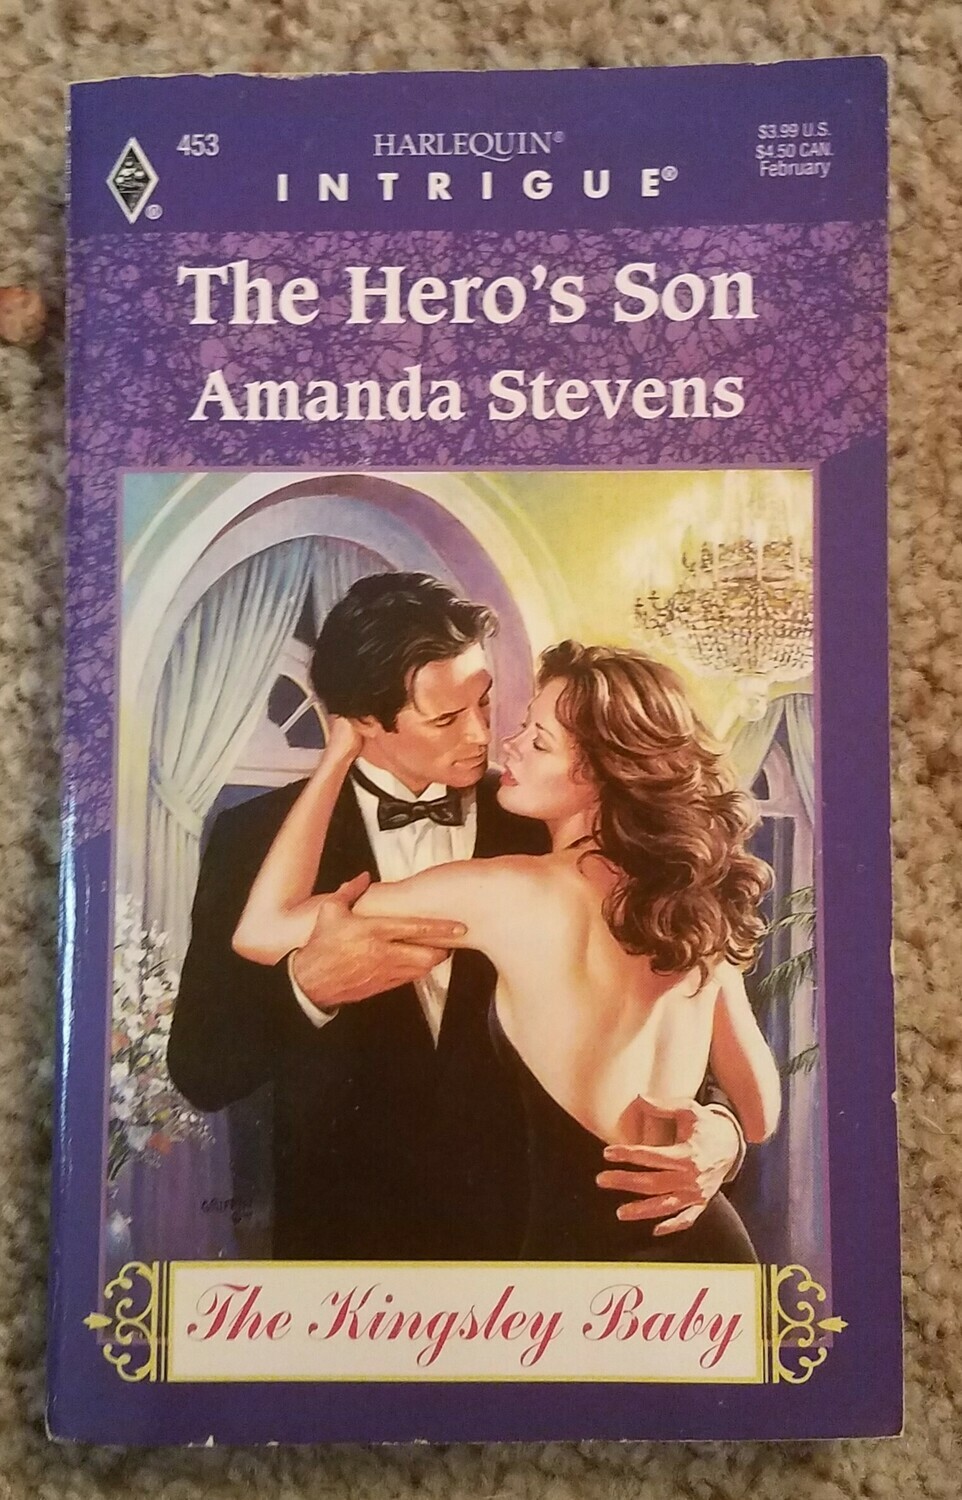 The Hero's Son by Amanda Stevens